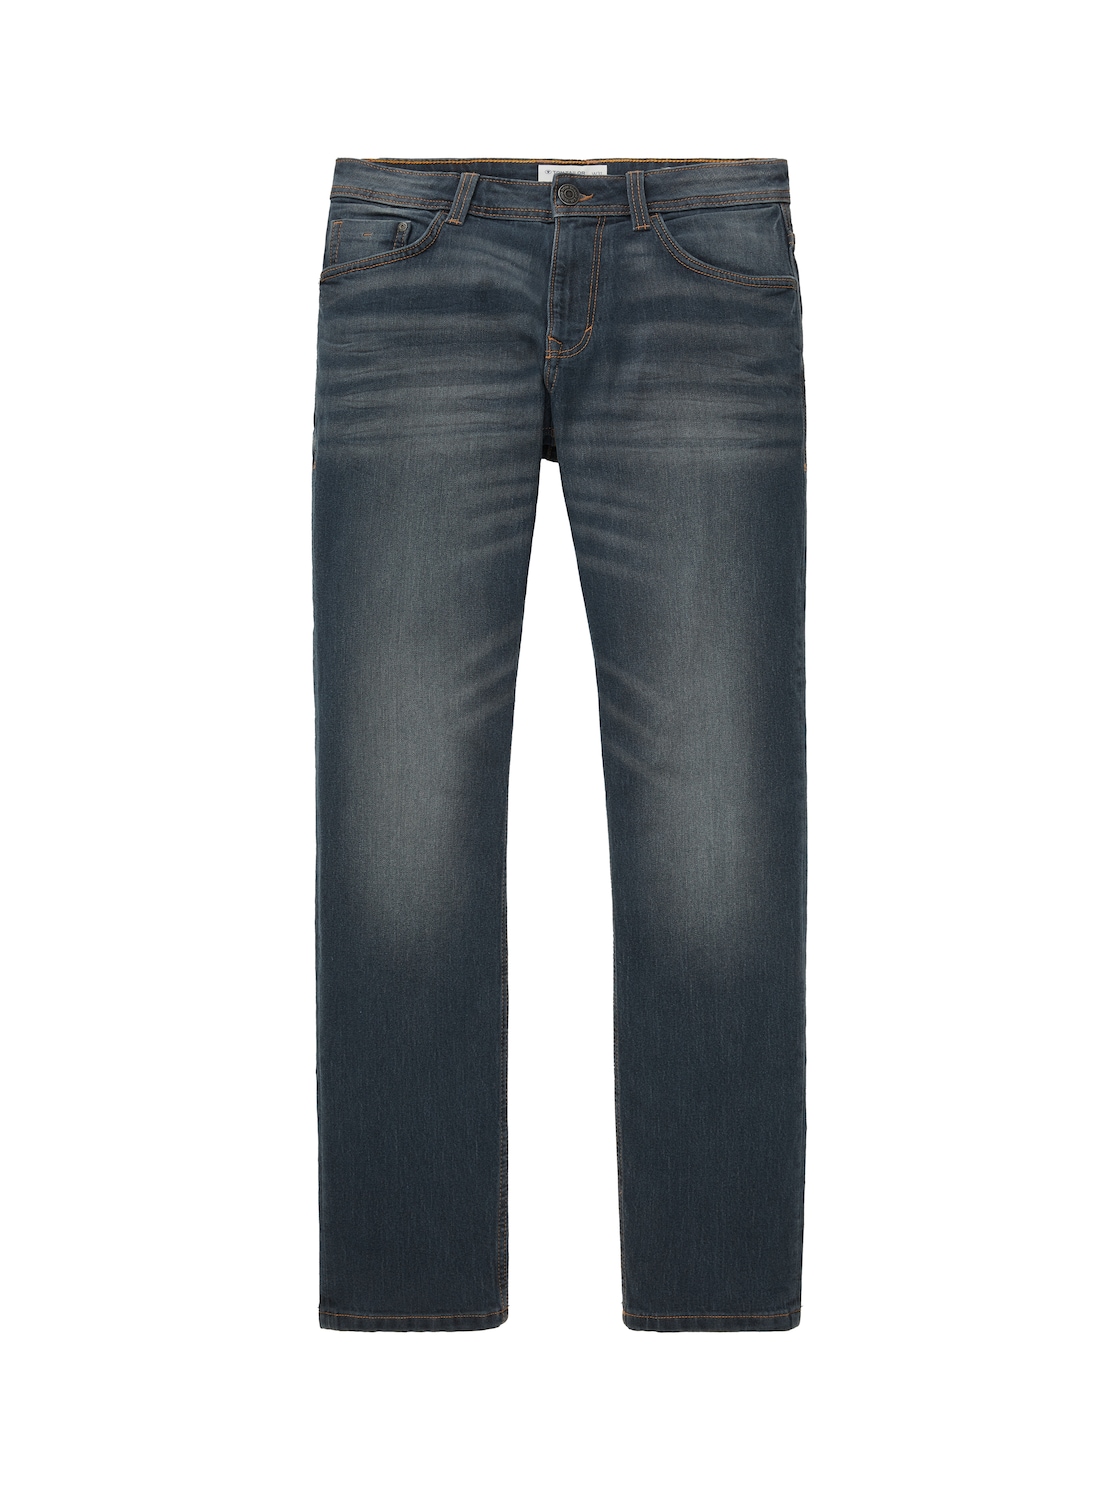 TOM TAILOR Herren Marvin Straight Jeans, blau, Uni, Gr. 34/34 von Tom Tailor